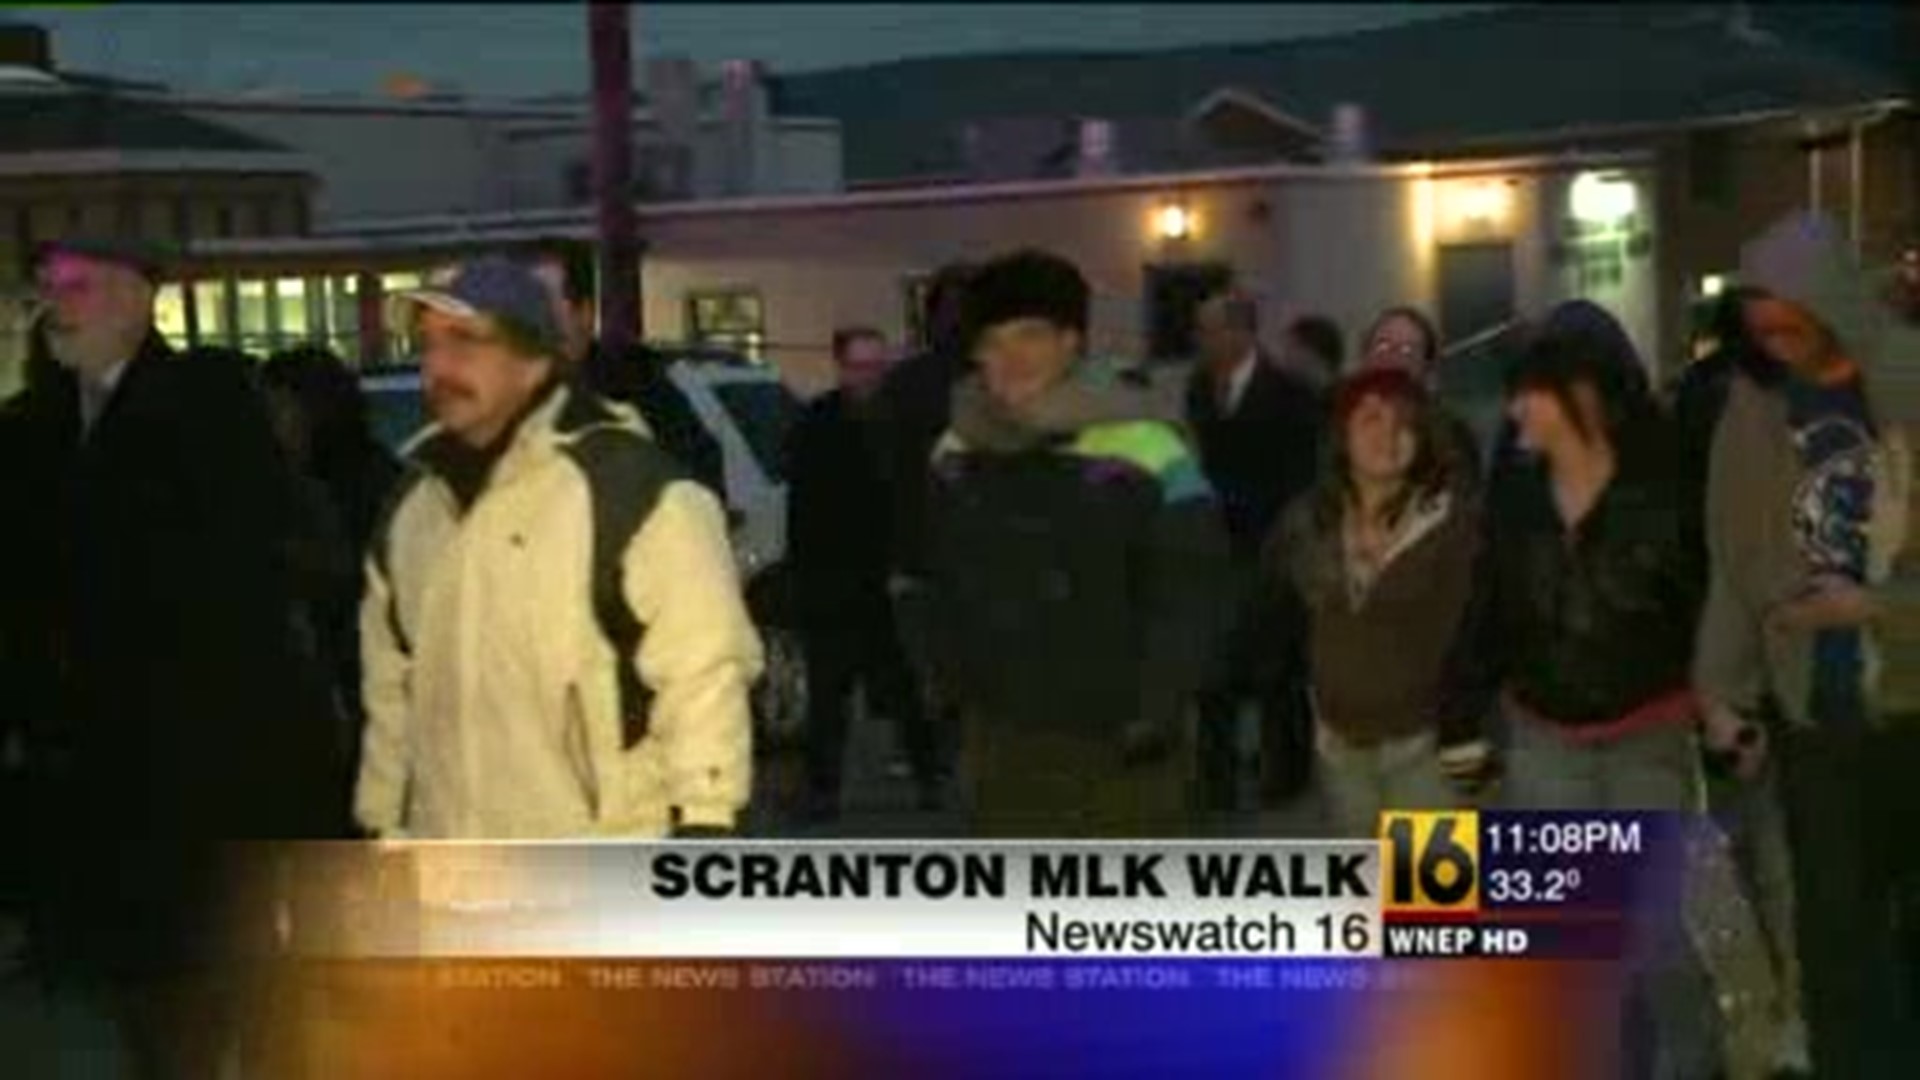 Scranton MLK Walk